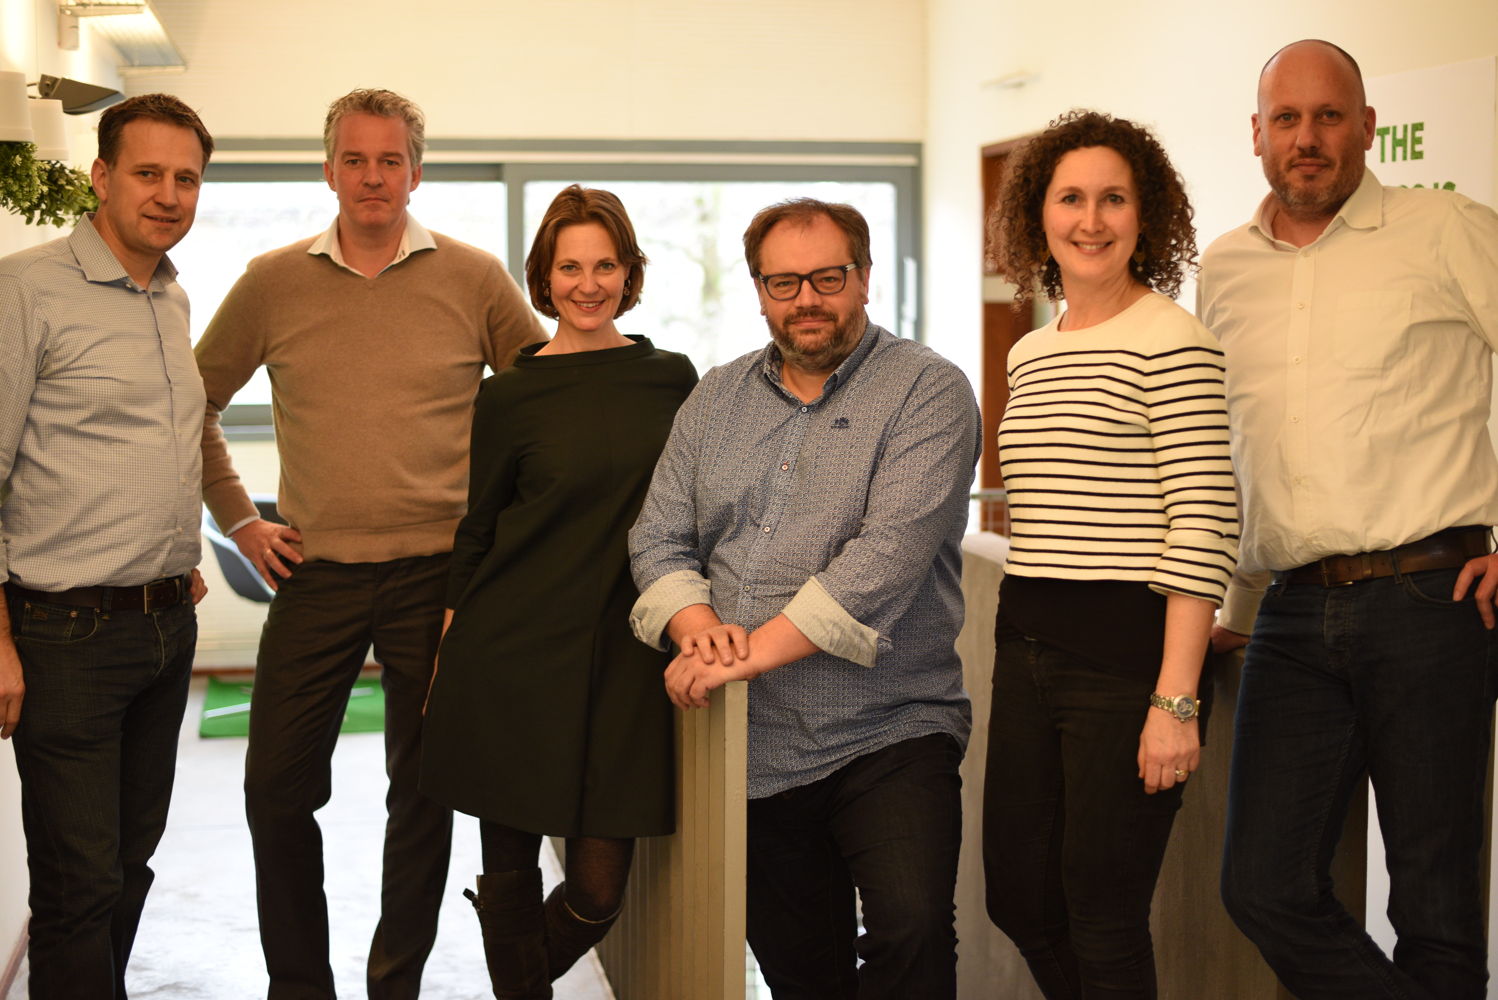 ‘Sproutingly yours’,

De gauche à droite: Hugo Hanselmann, Geert Fernhout, Florence Hoevers, Jurgen Coetsiers, Majorie van Kuik en Pascal Binard